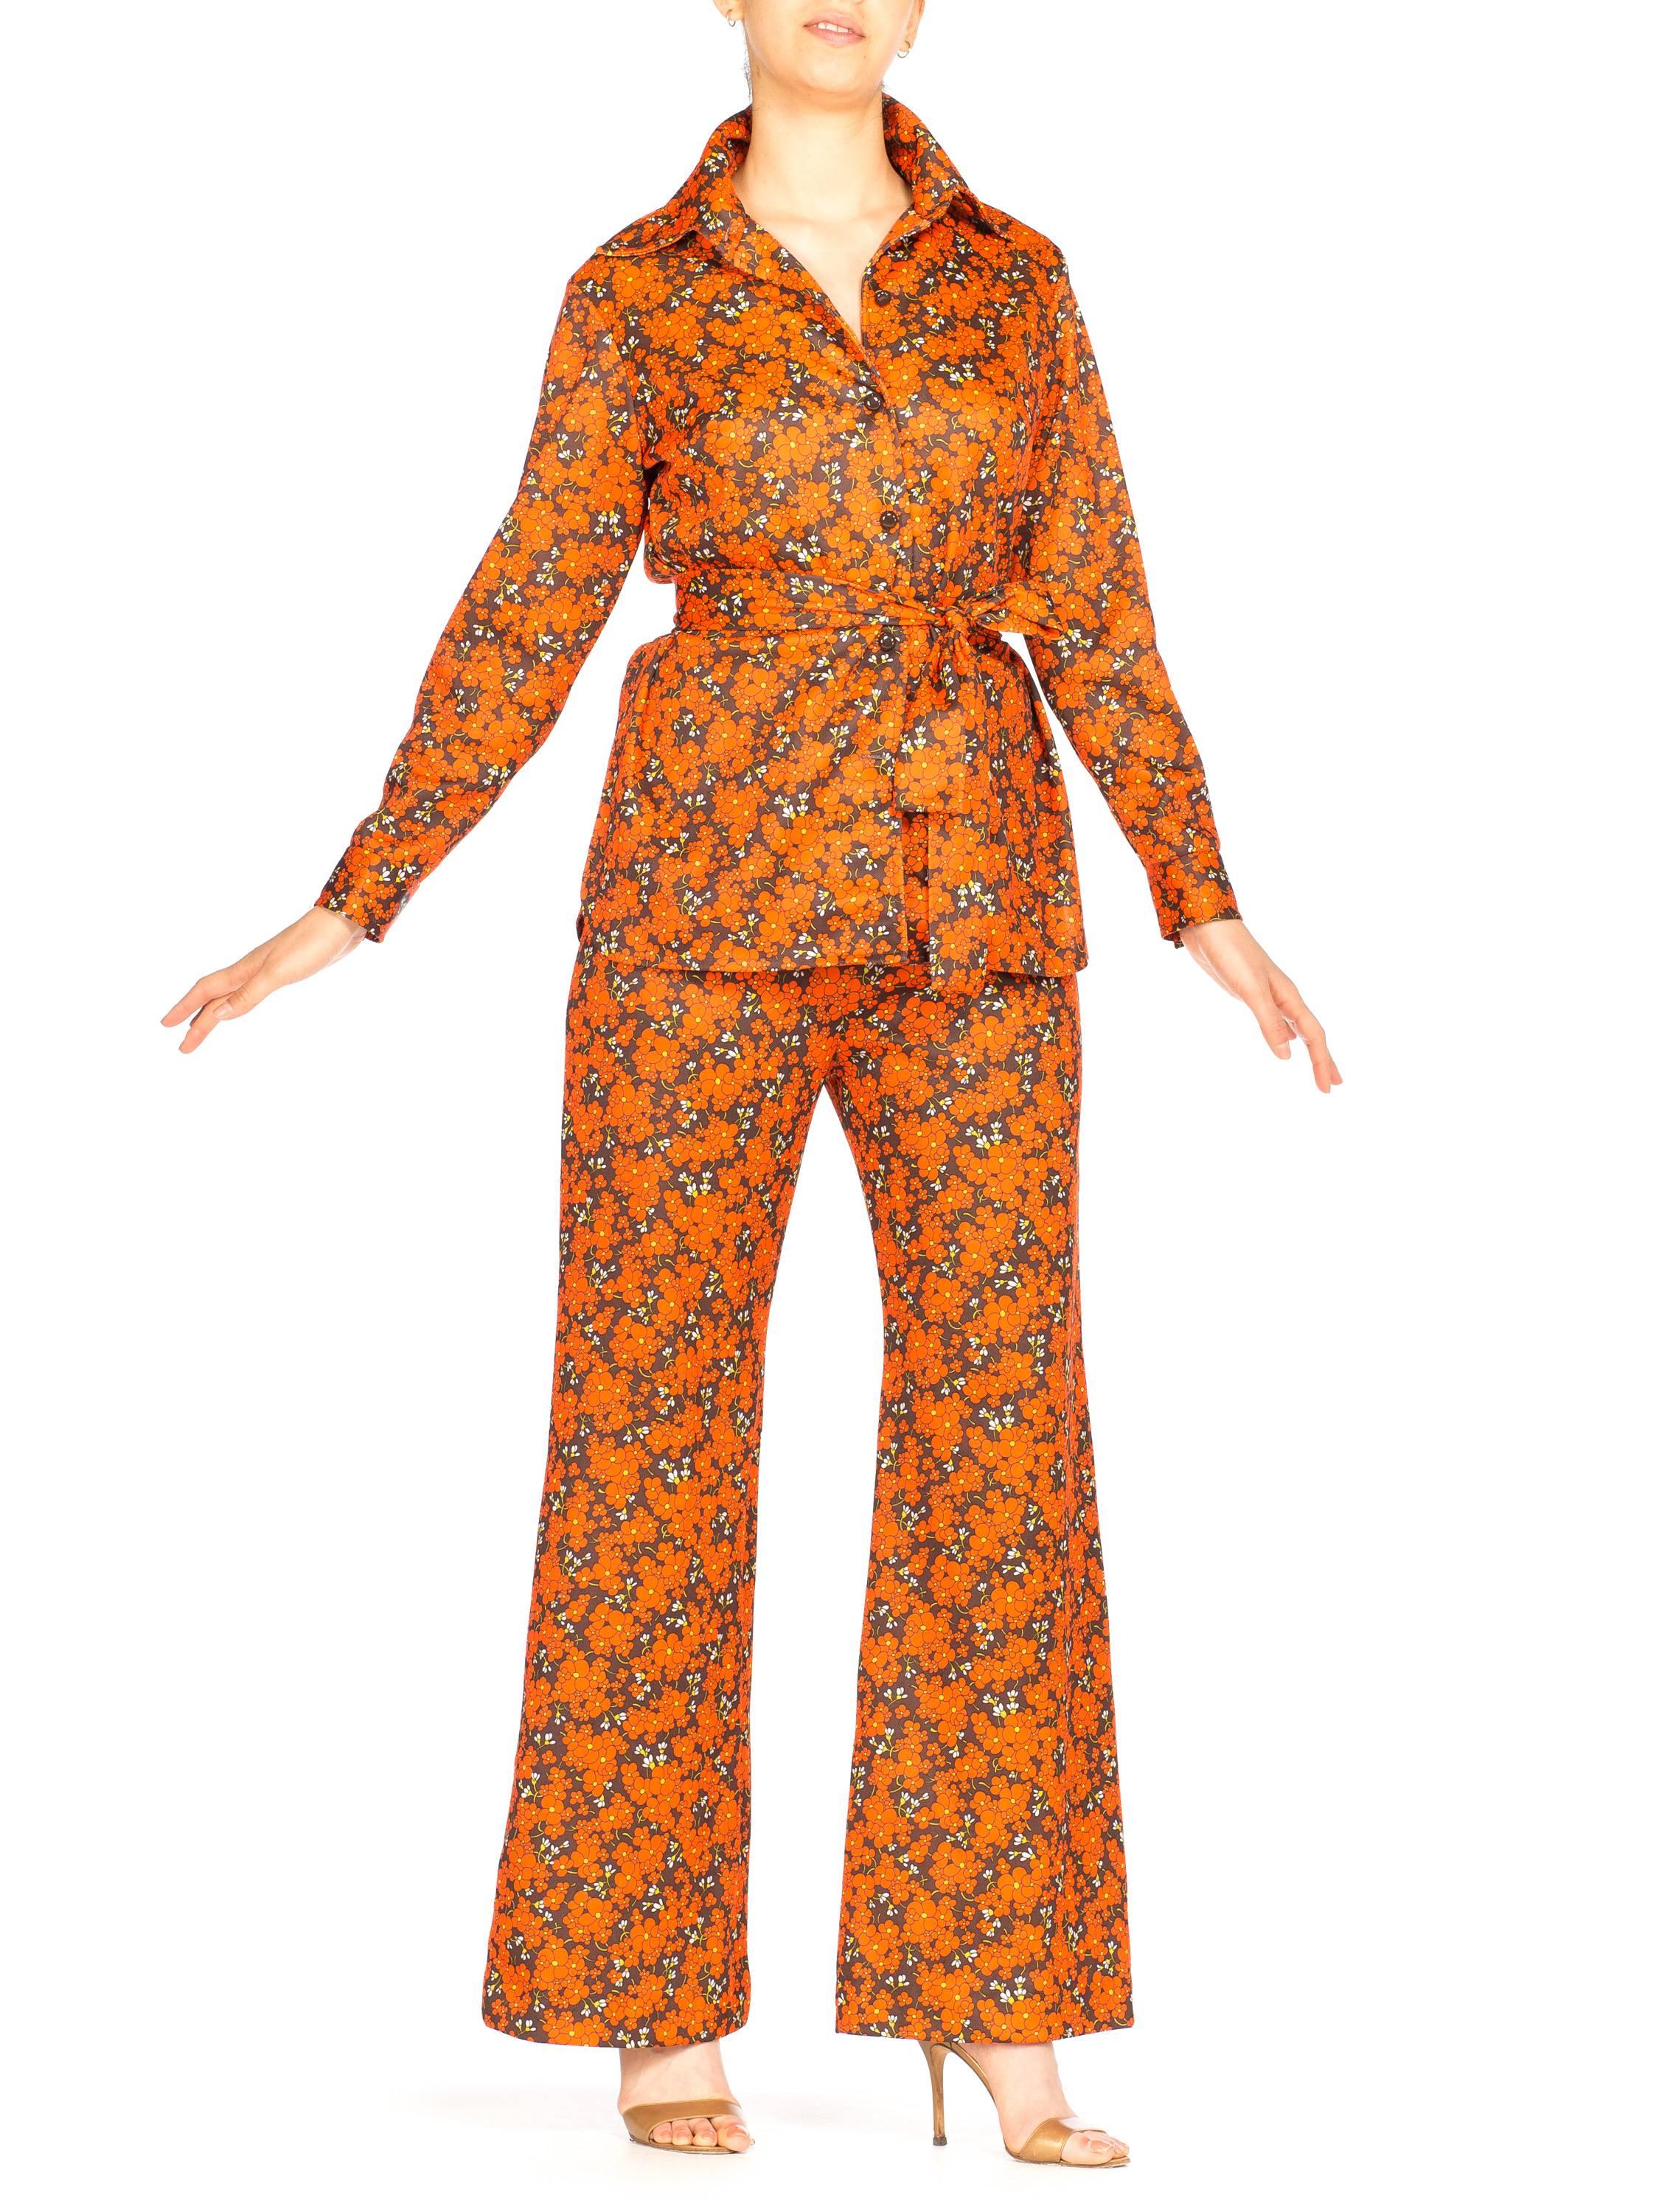 Orange and Brown Floral Mod Disco Pantsuit Set, 1970s 8